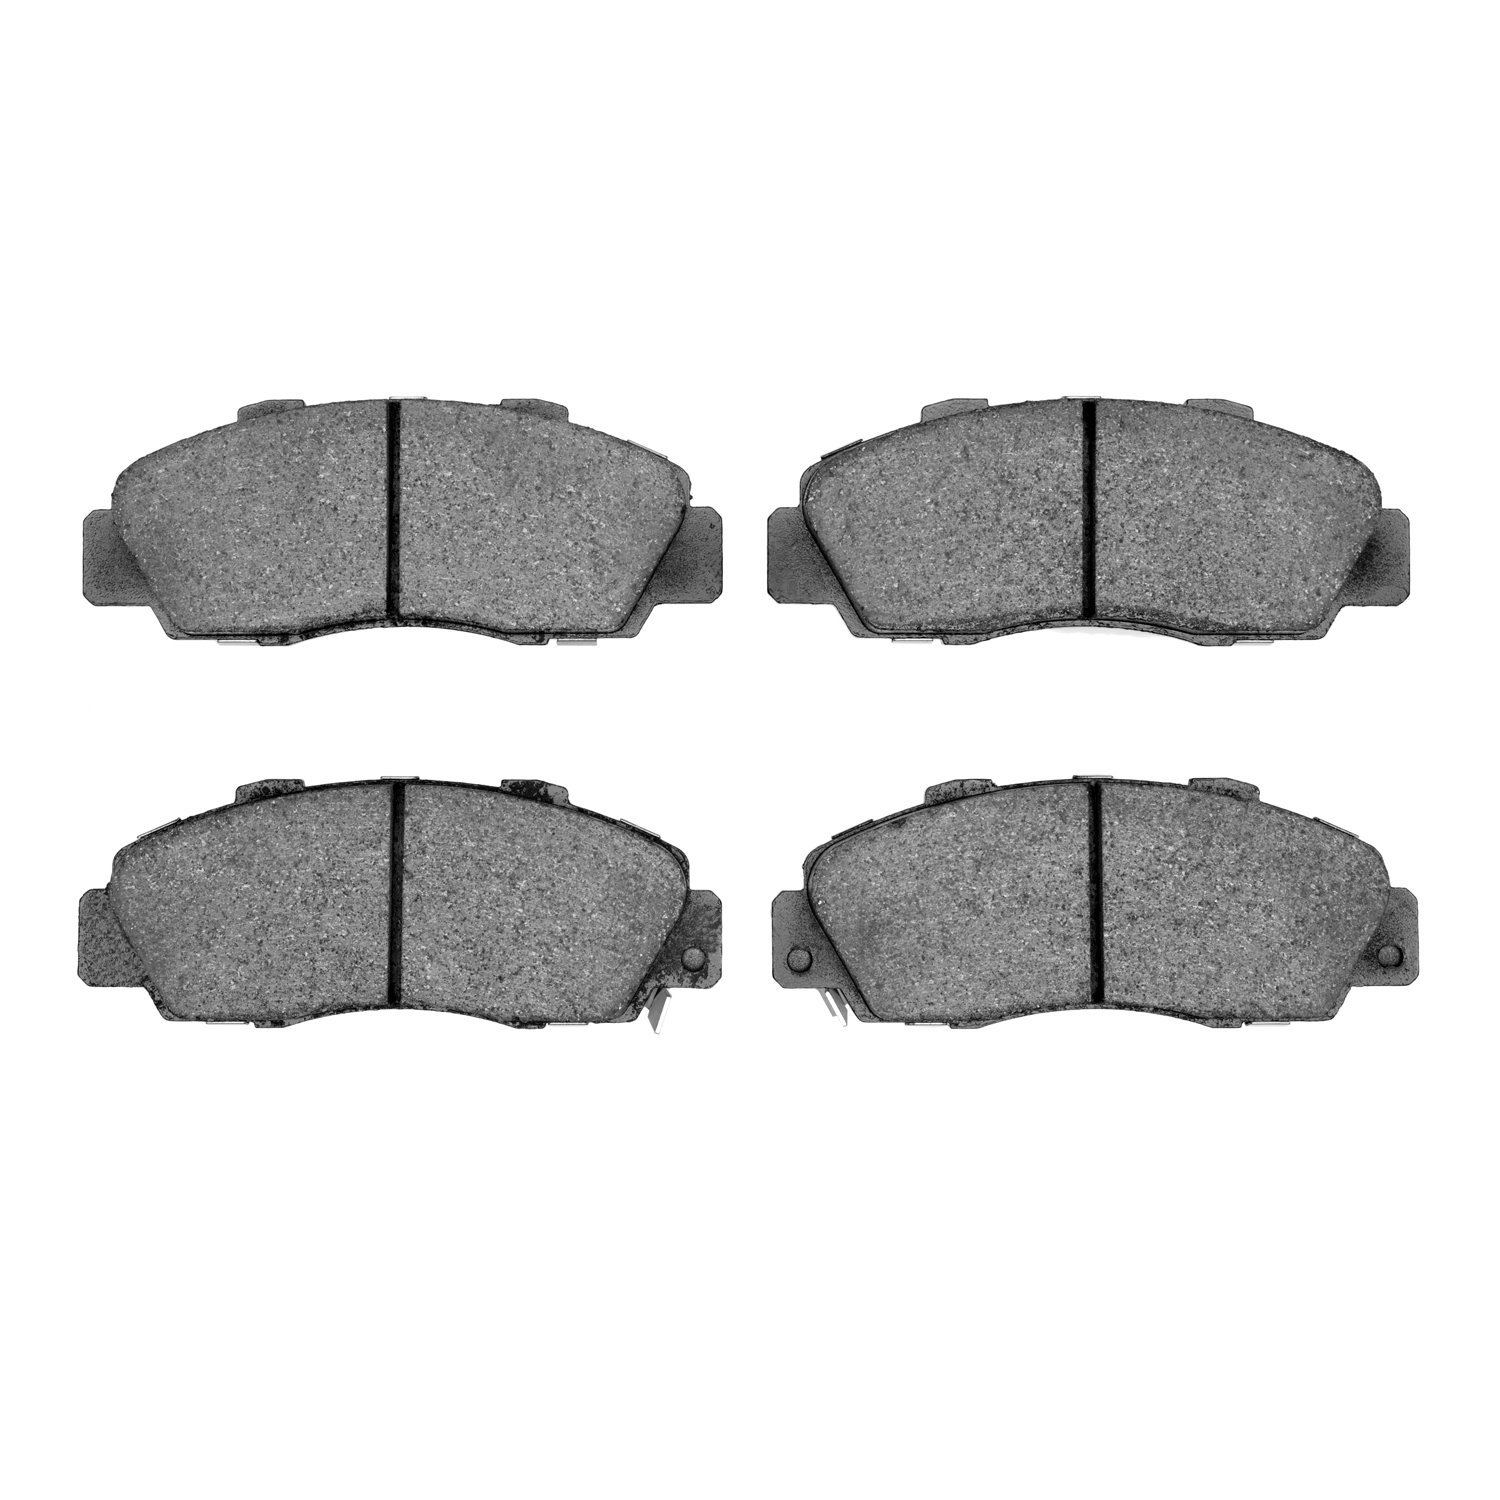 1310-0503-00 3000-Series Ceramic Brake Pads, 1991-2005 Multiple Makes/Models, Position: Front